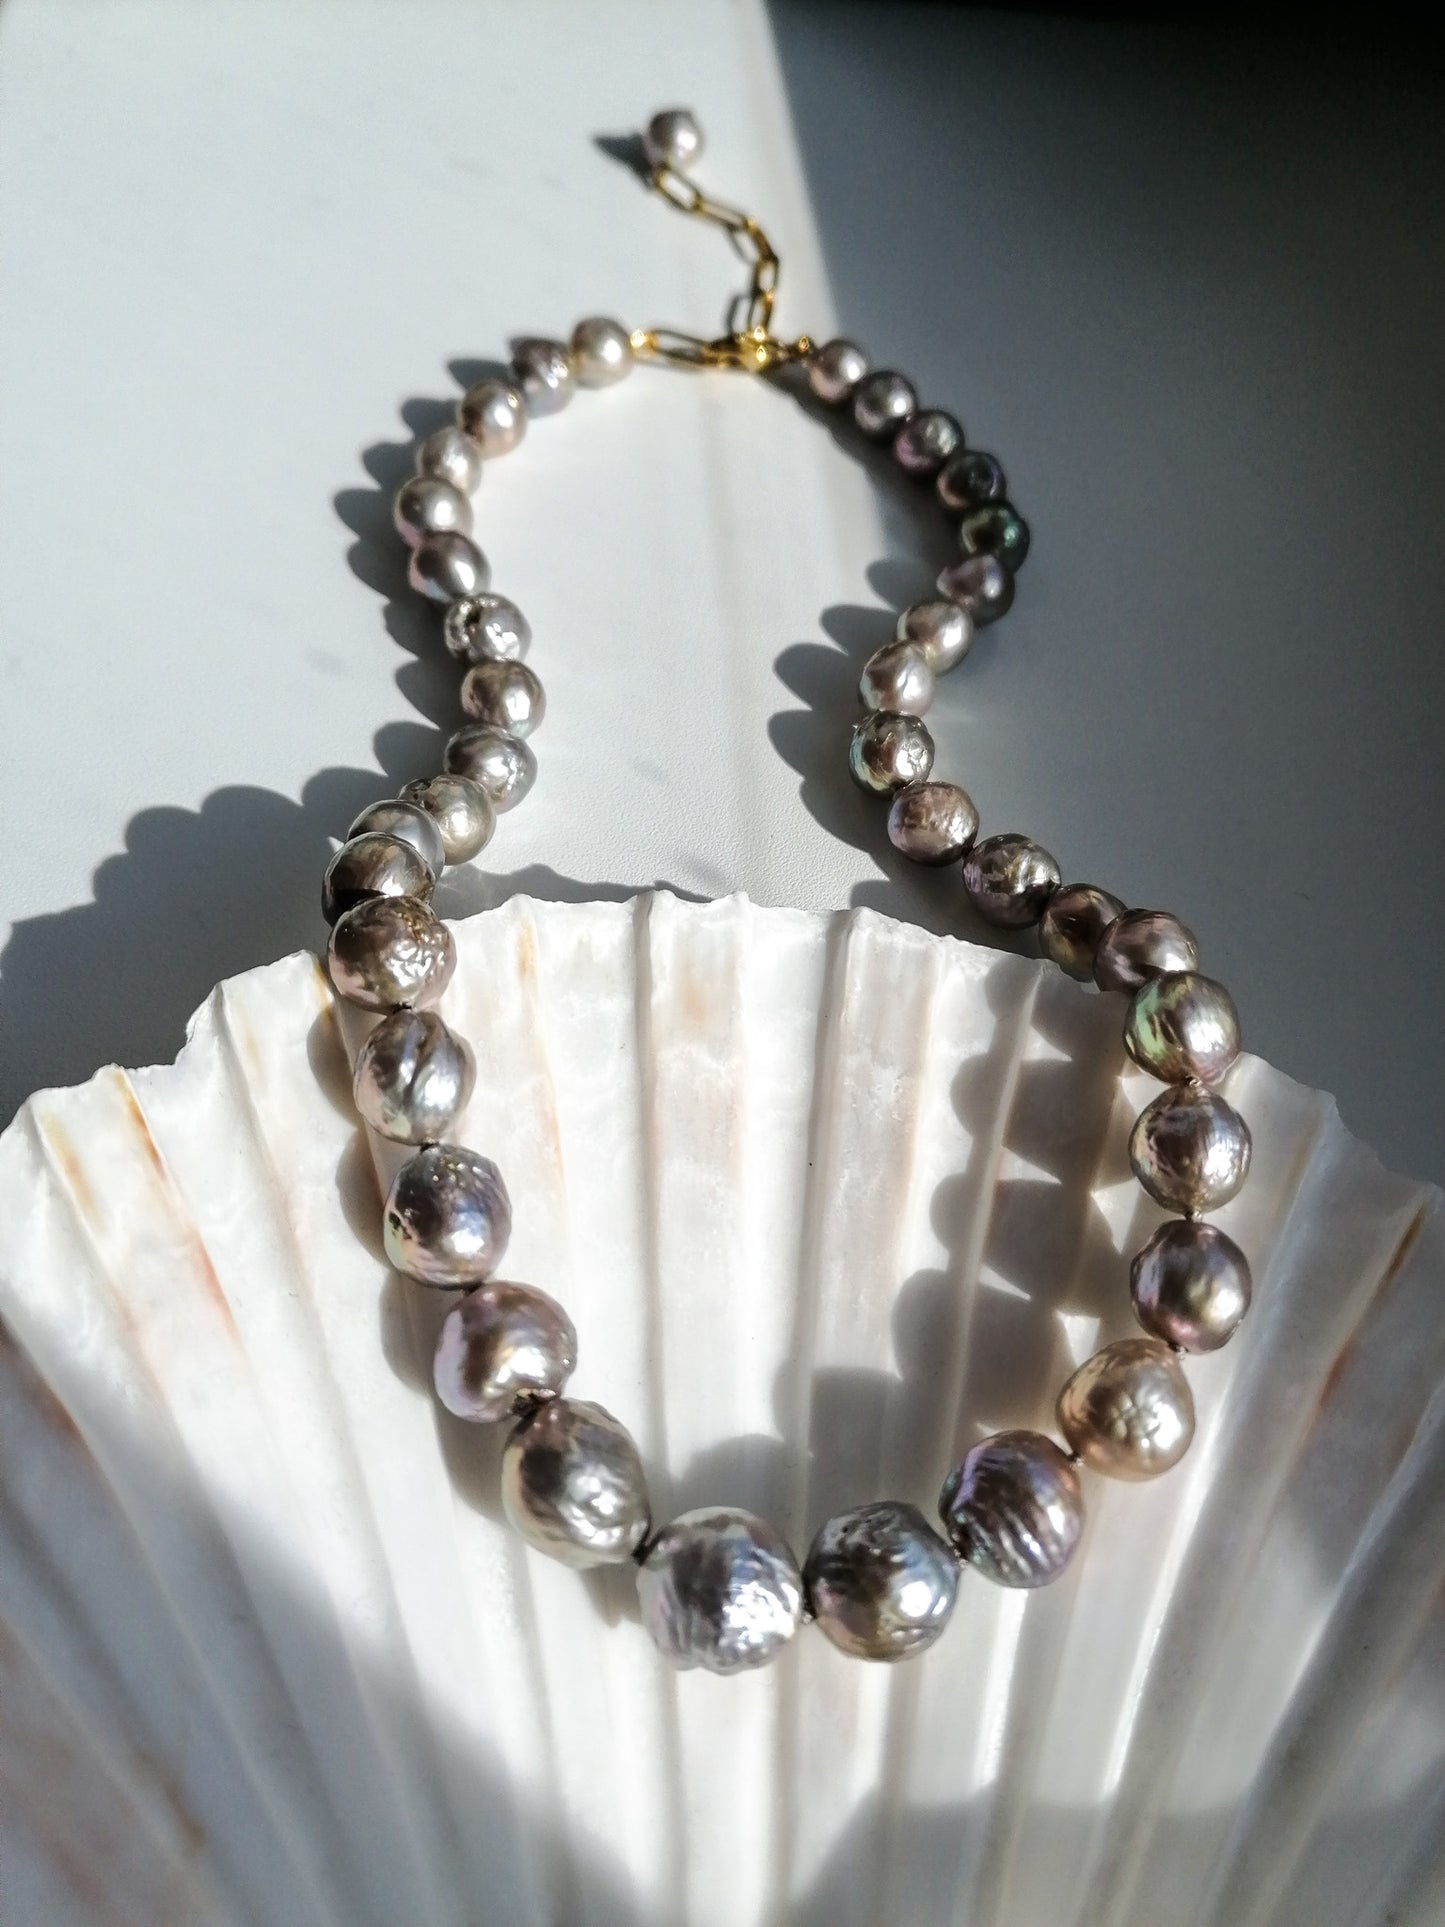 Edison pearl necklace